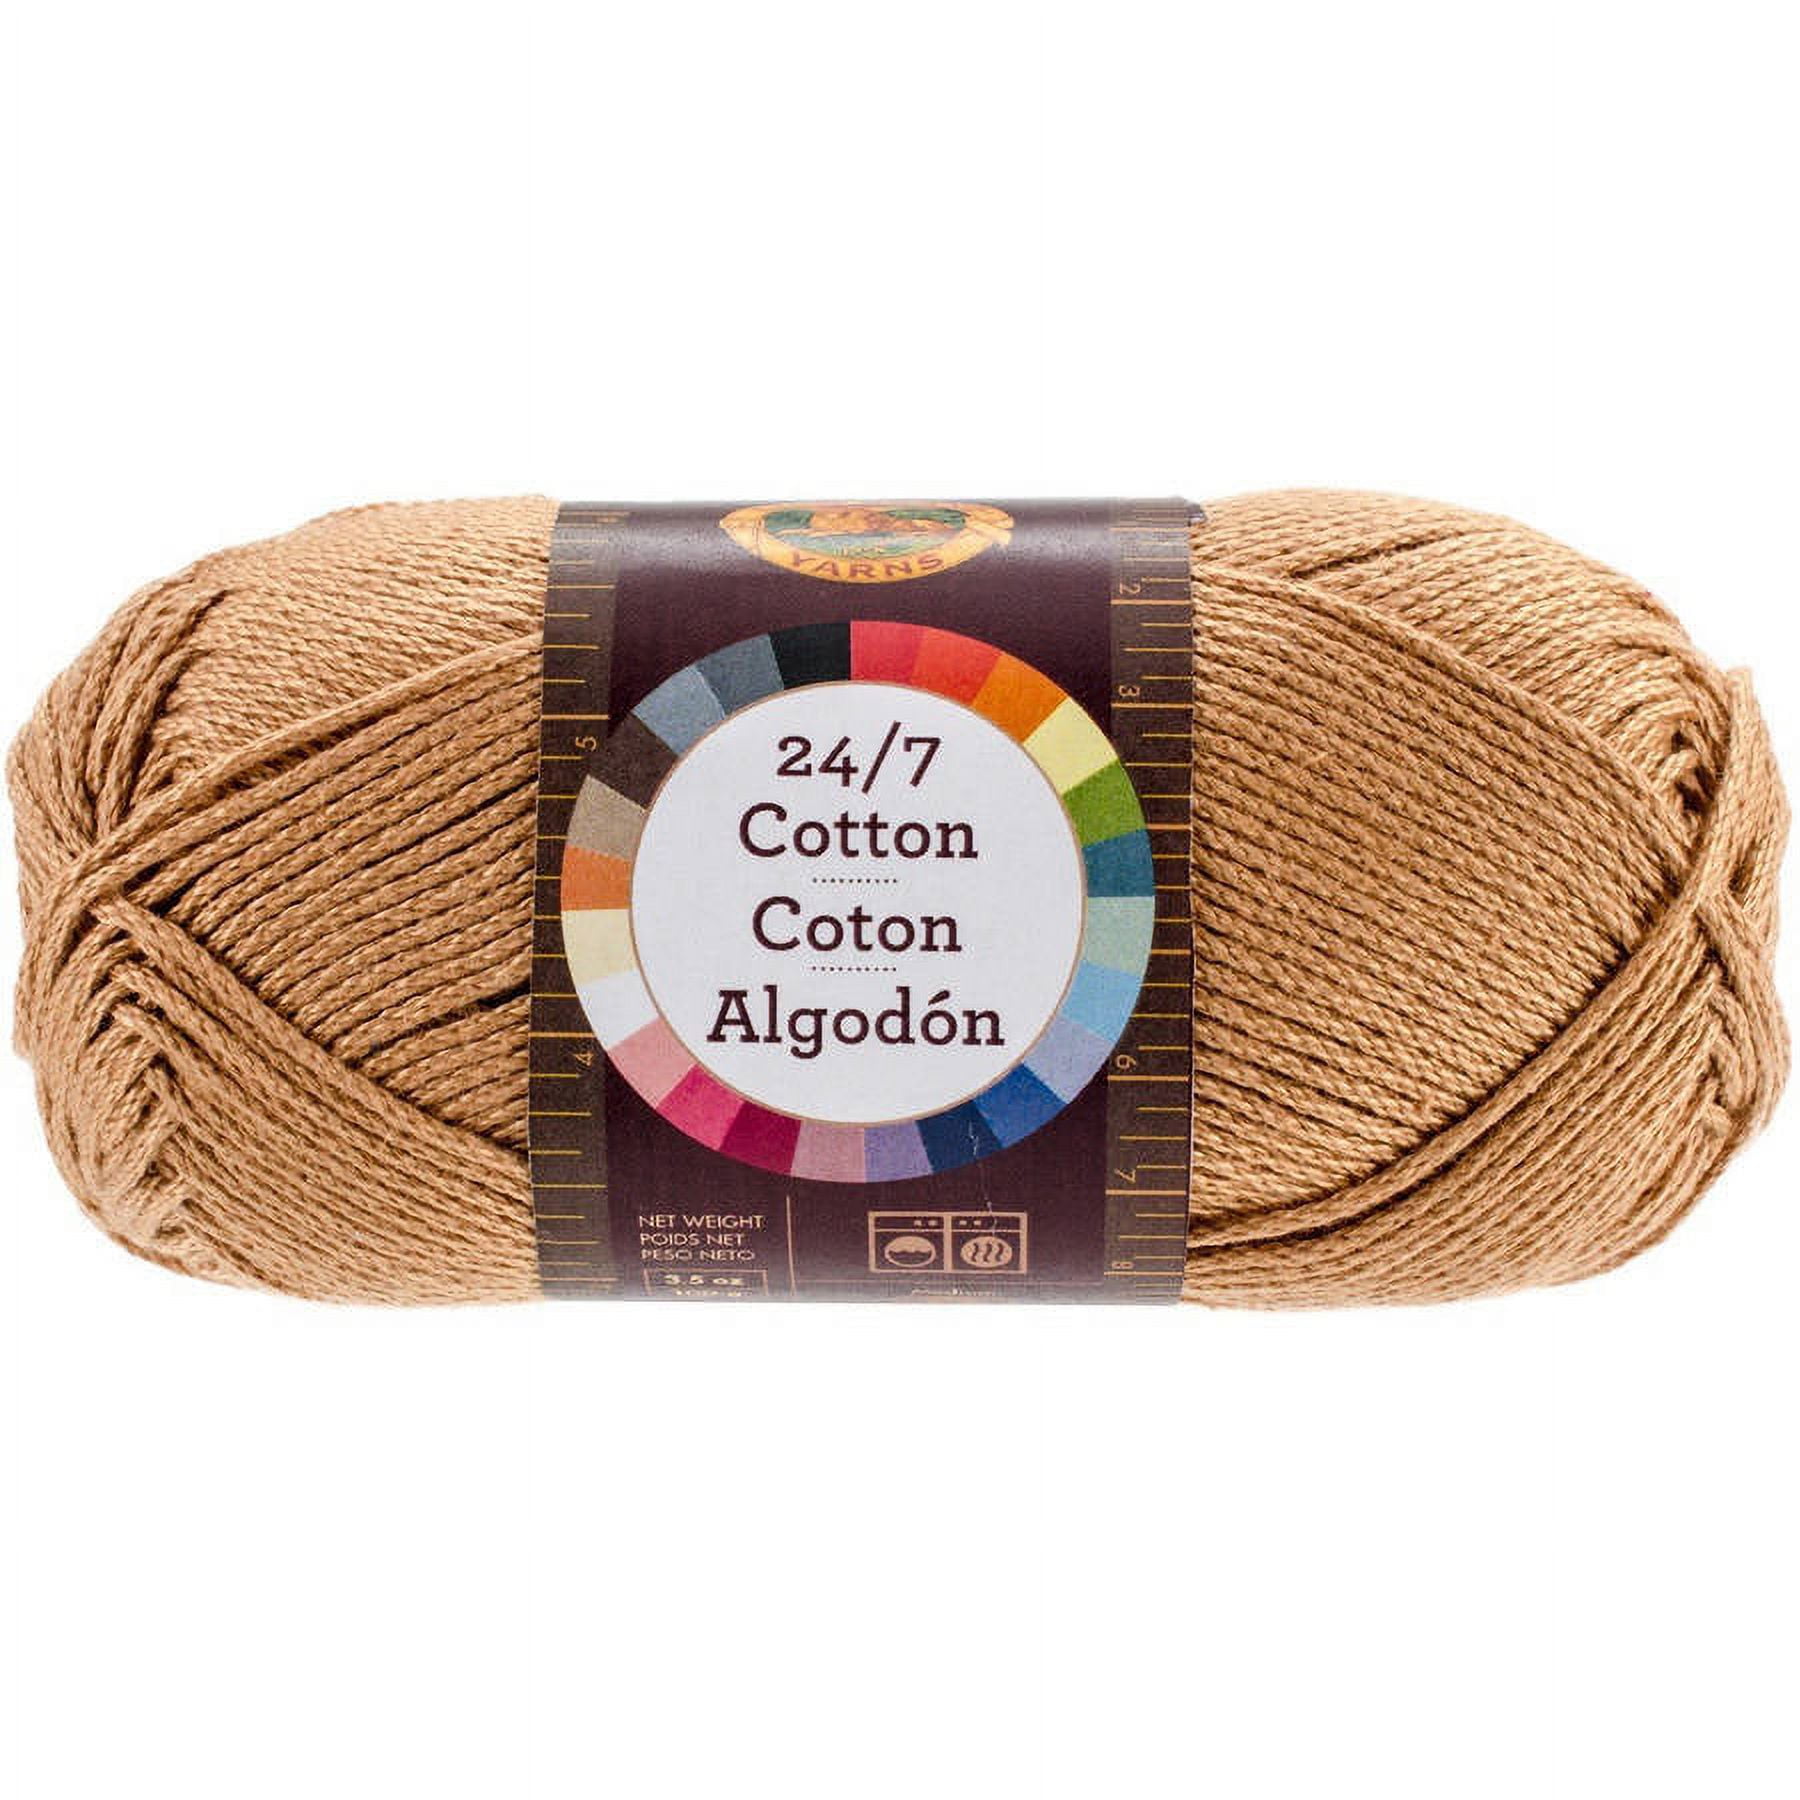 24/7 Cotton - 100g - Lion Brand – Len's Mill